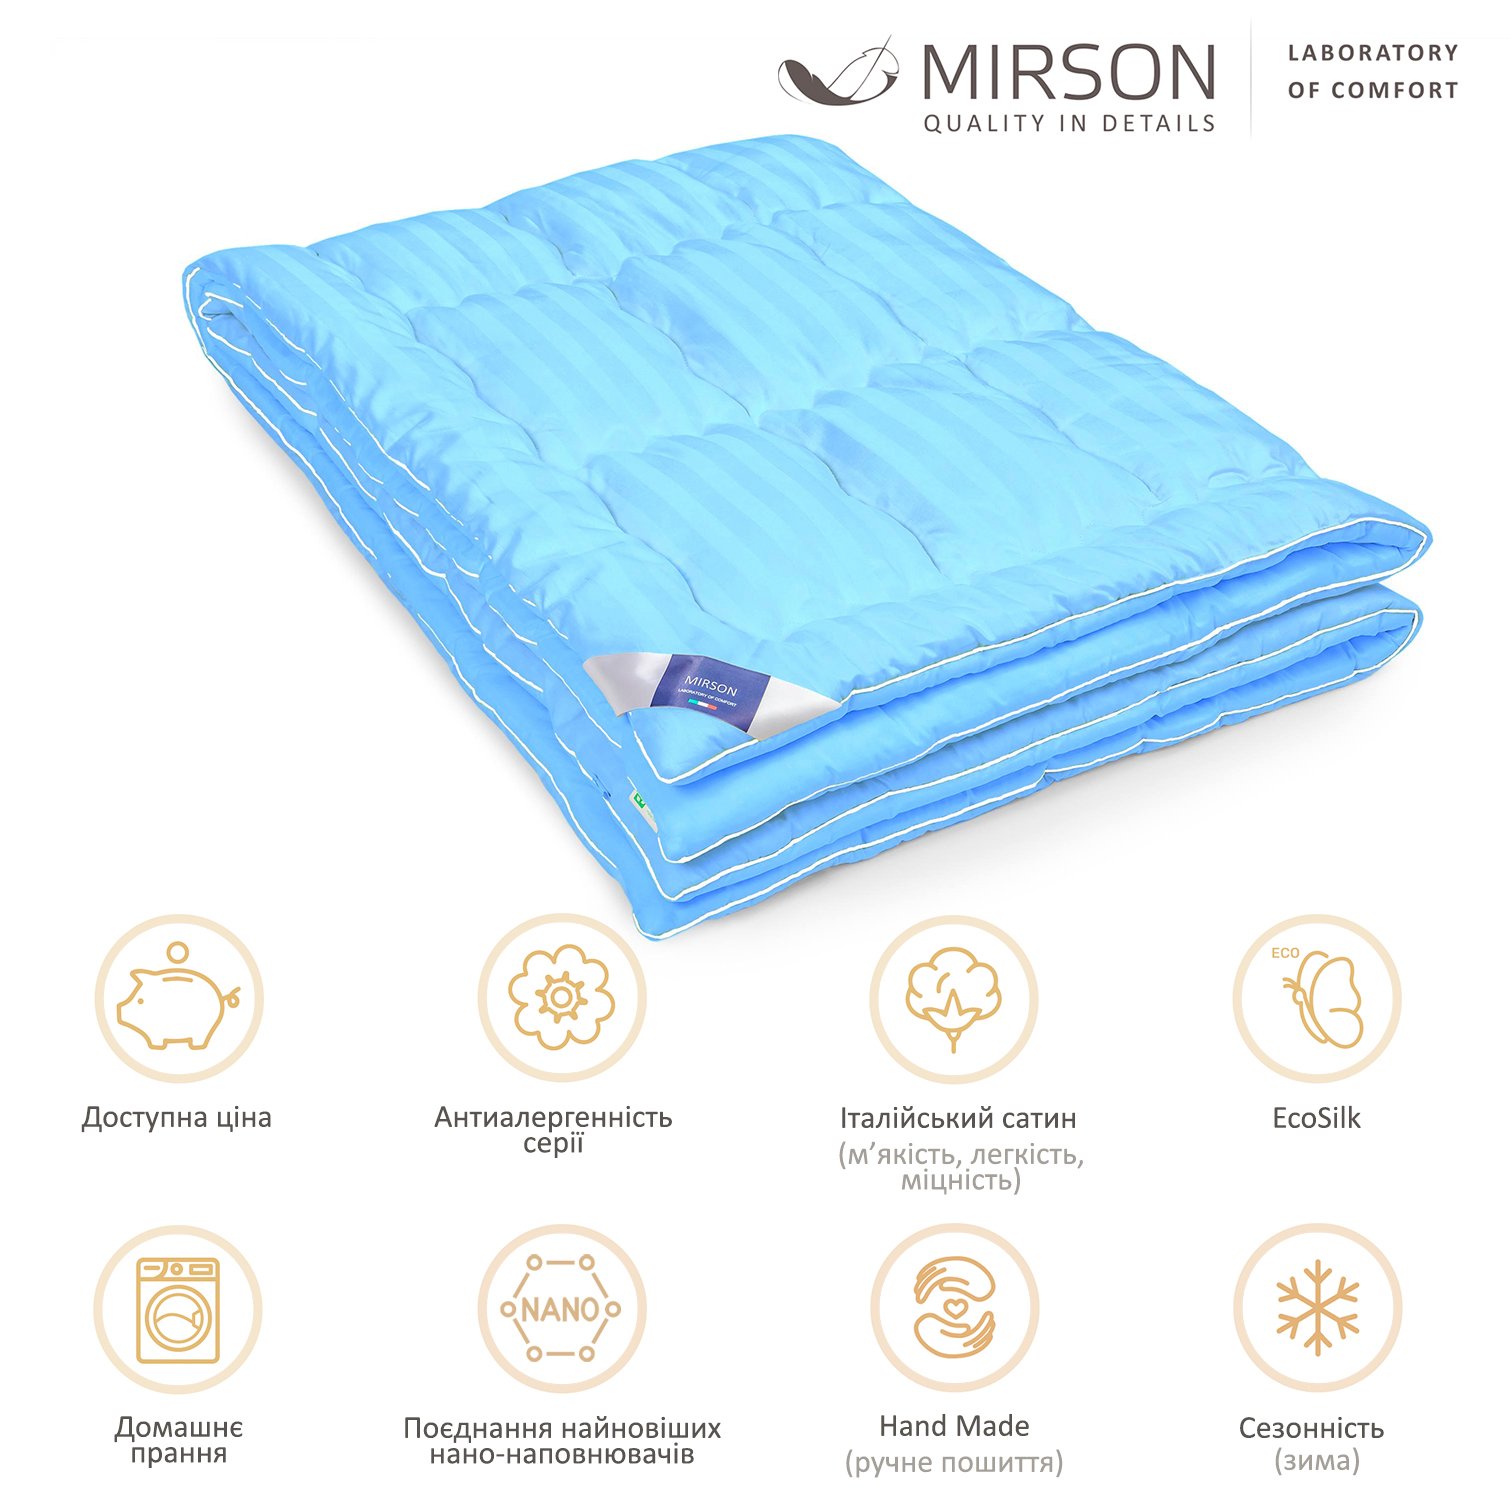 Одеяло антиаллергенное MirSon Valentino Premium Hand Made №067, зимнее, 110x140 см, голубое - фото 5